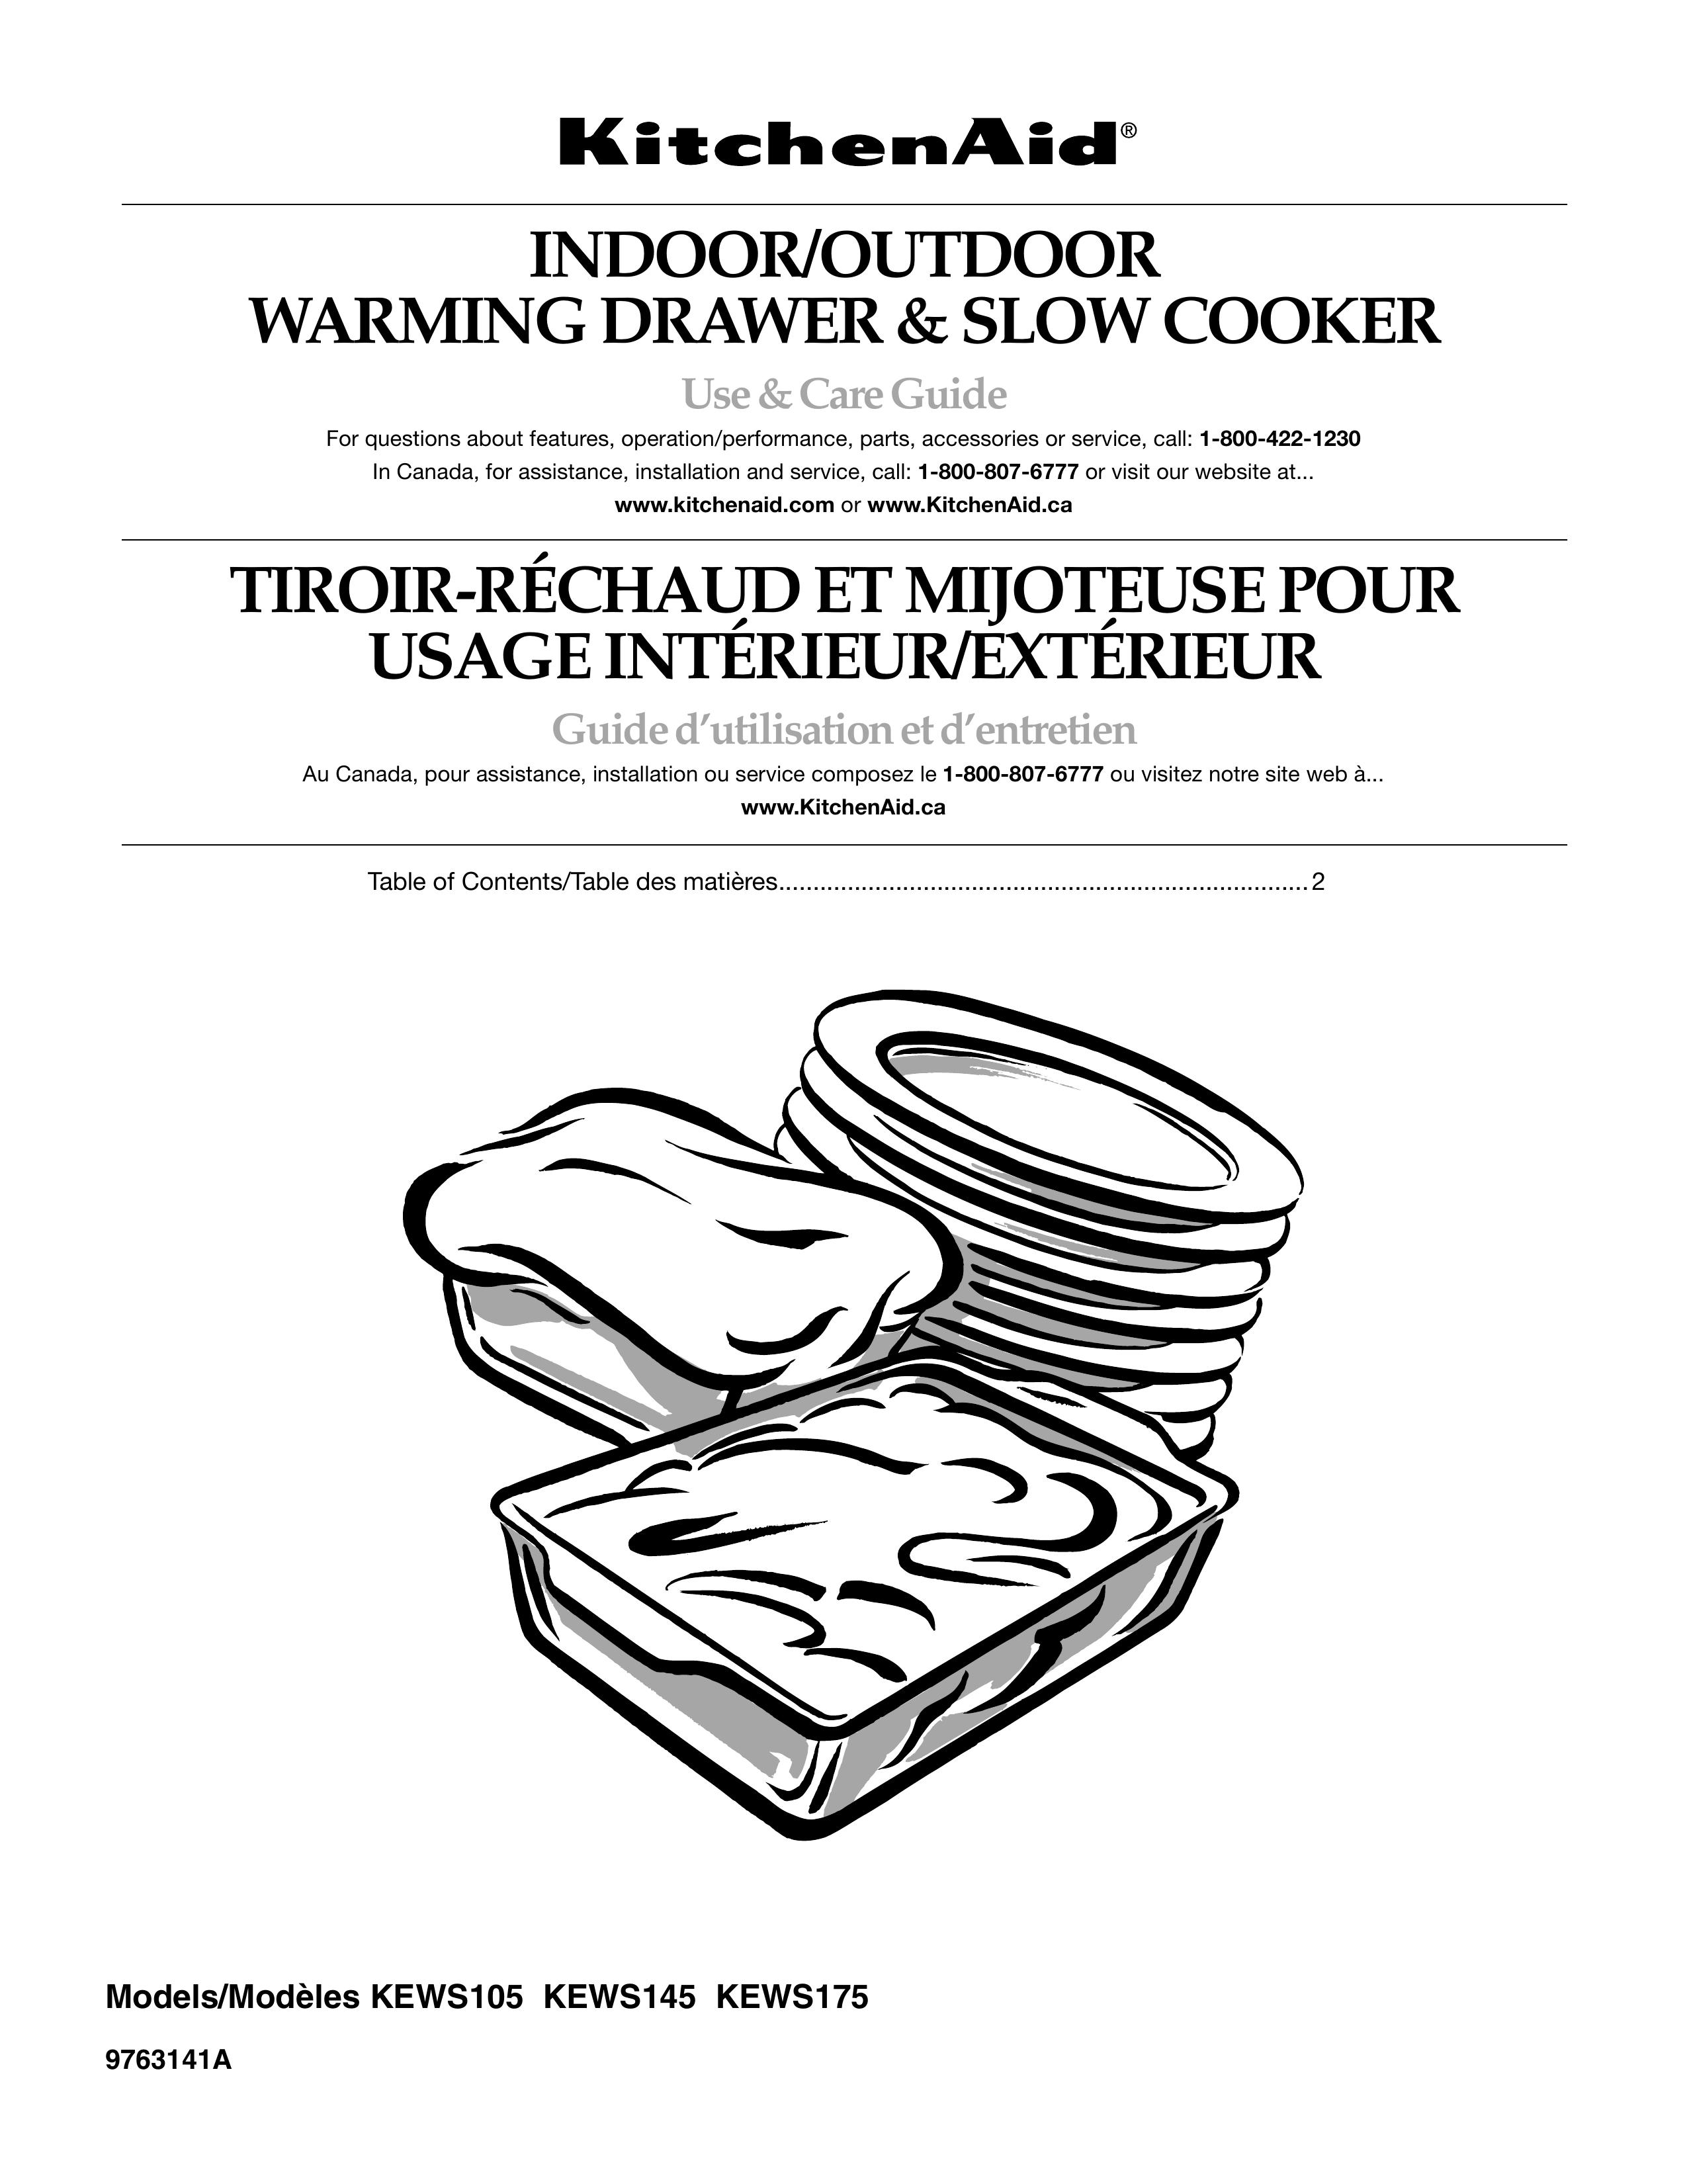 KitchenAid KEWS175 Slow Cooker User Manual